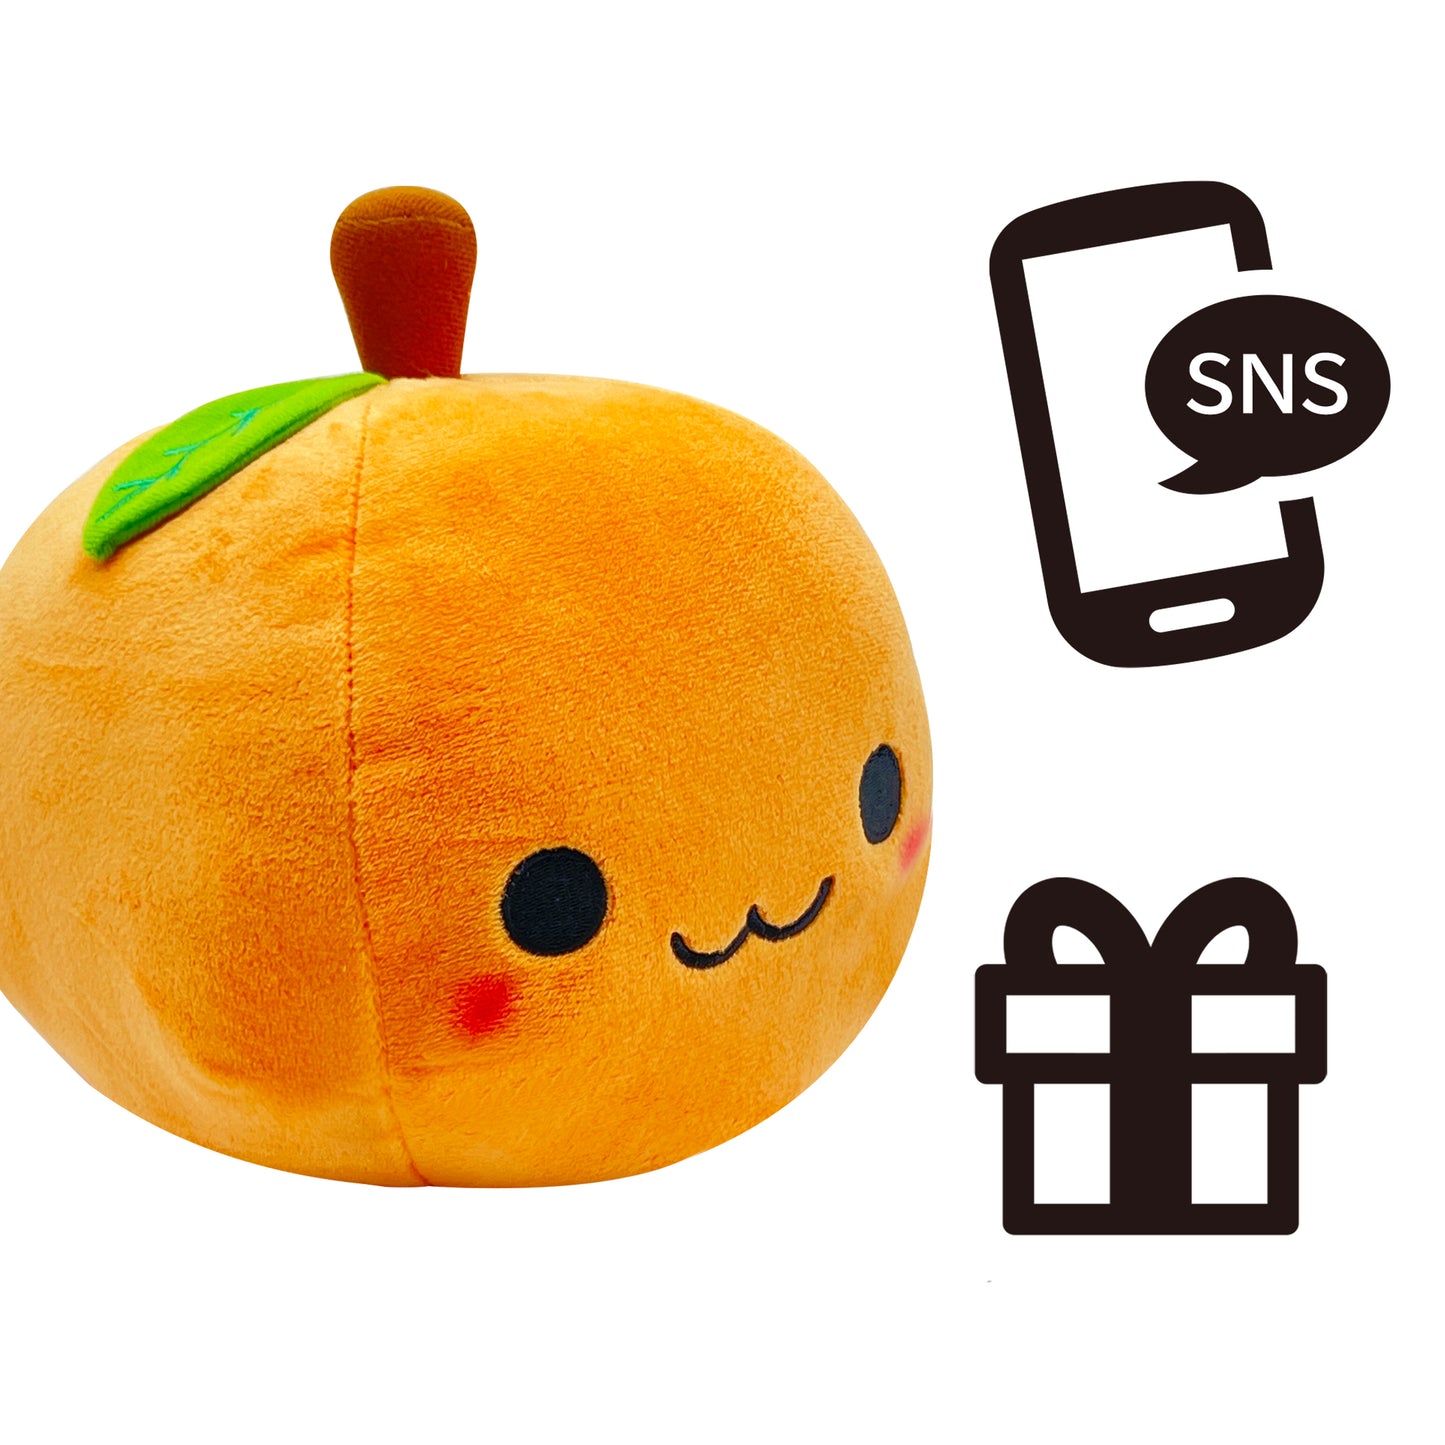 Pictogram of Orange Fruit Stuffed Toy Mikanchan Orange